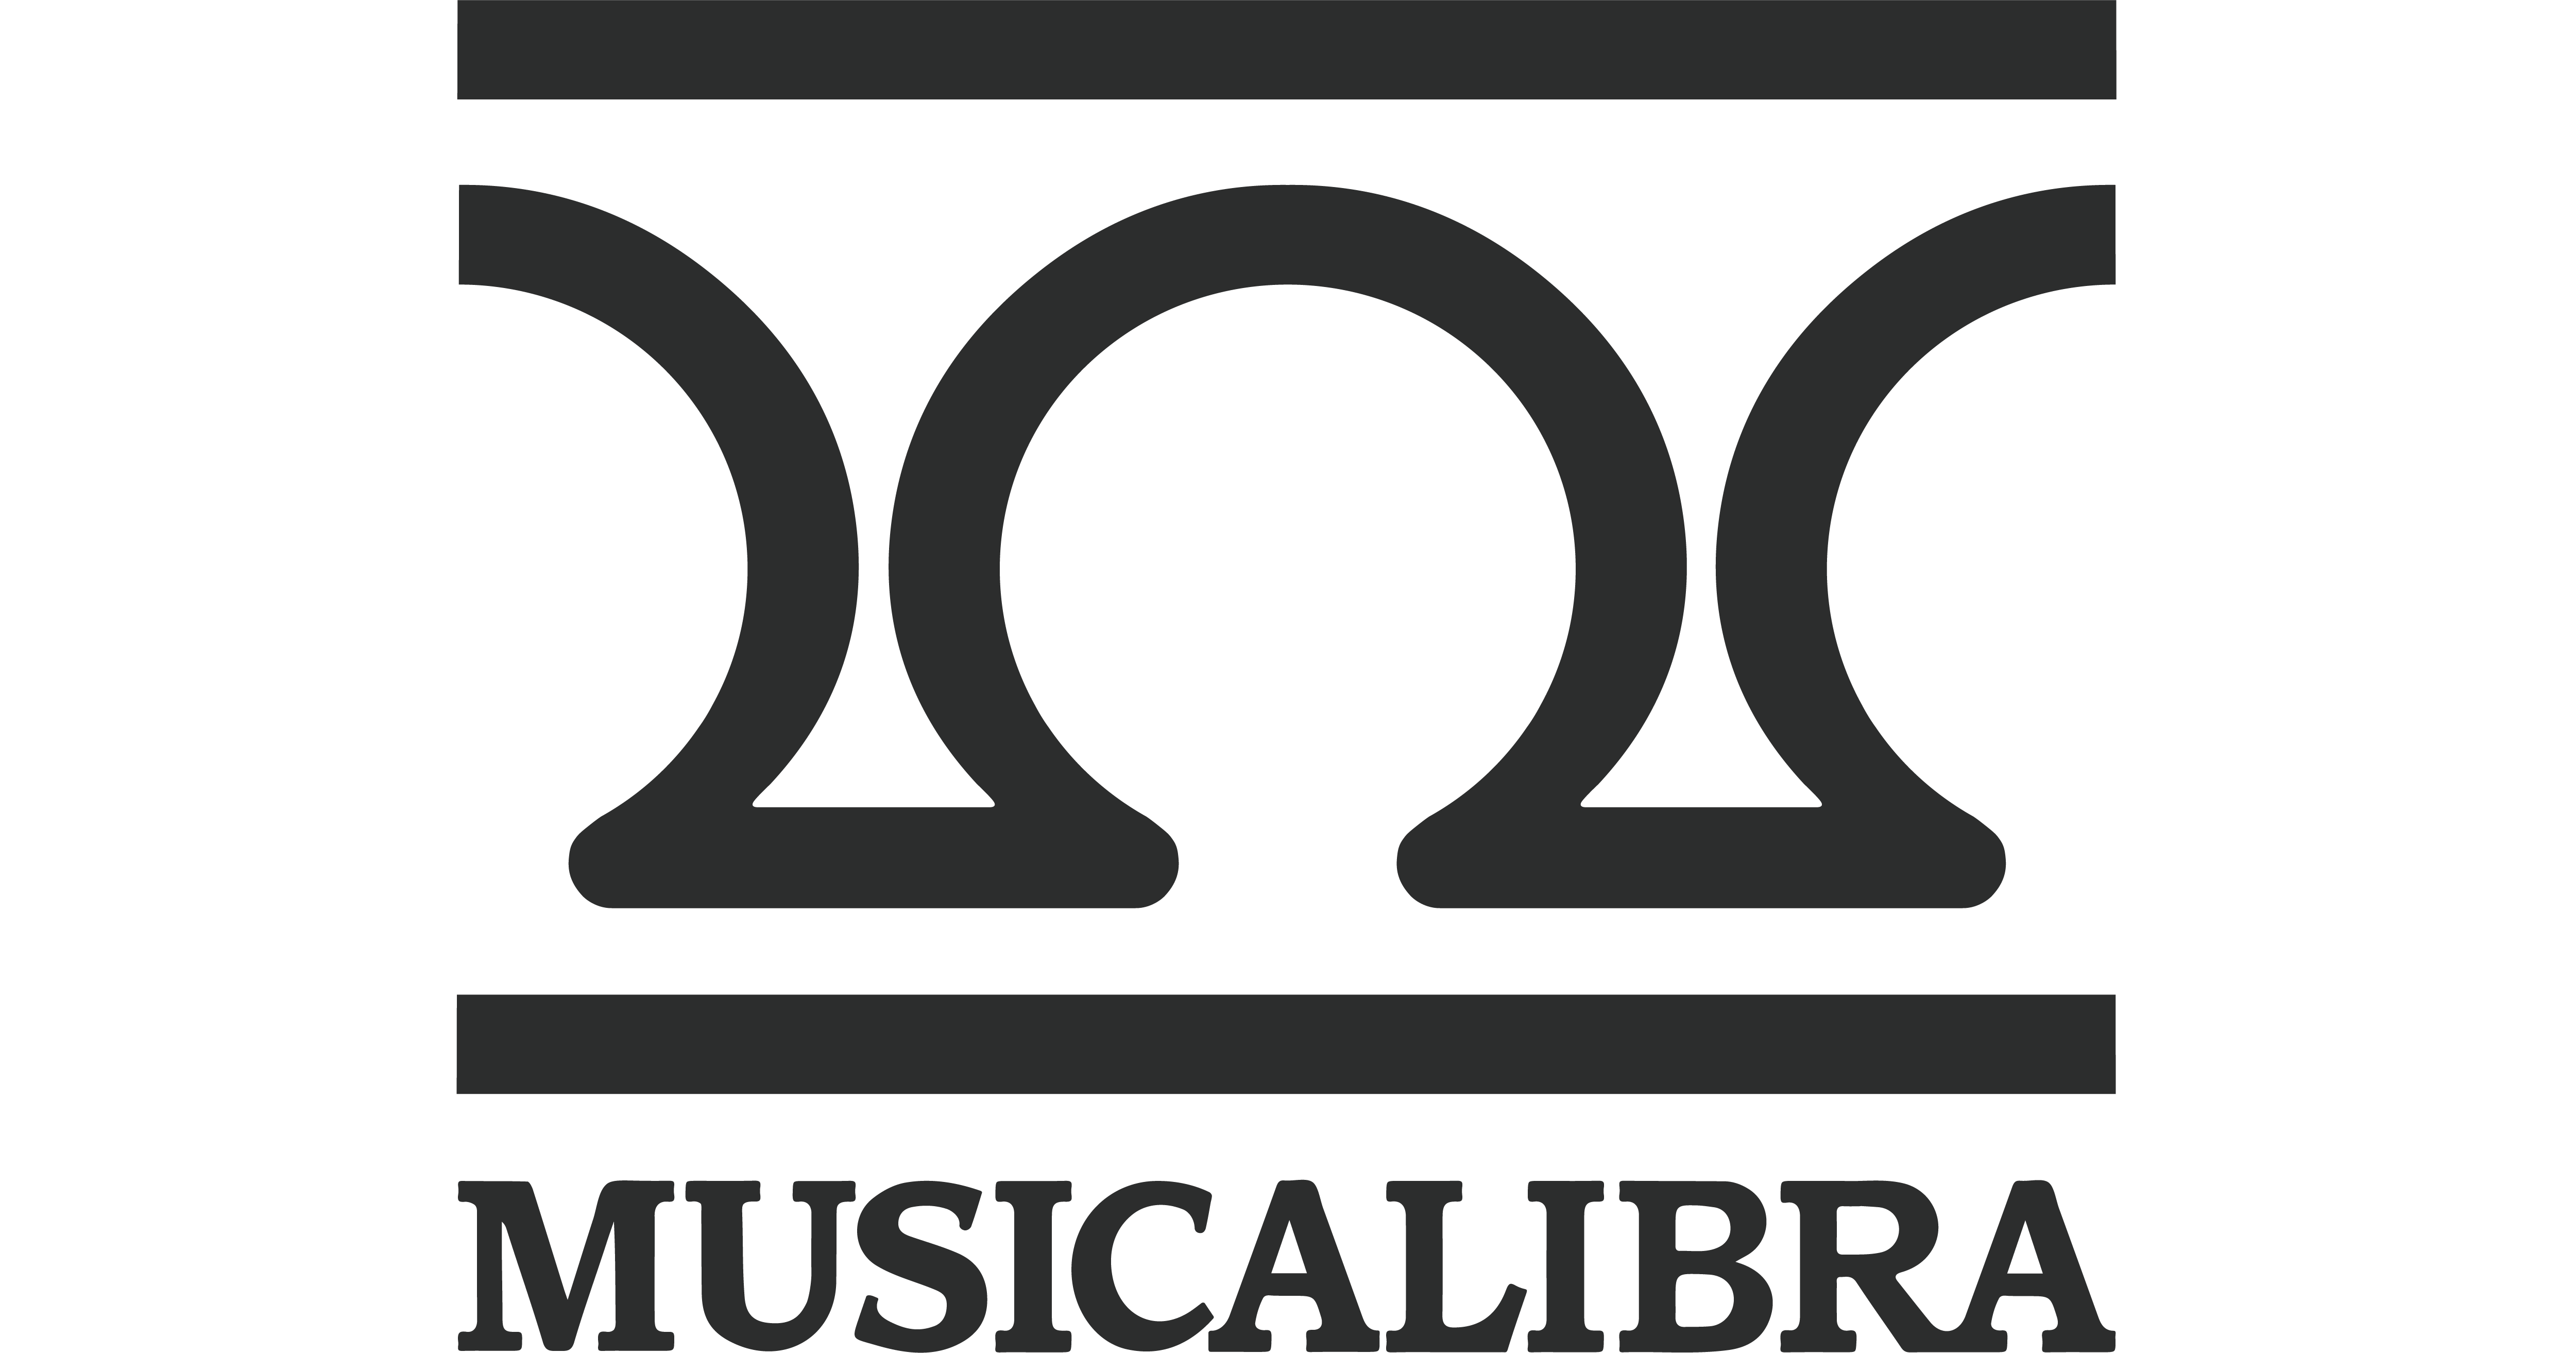 Musicalibra Spain